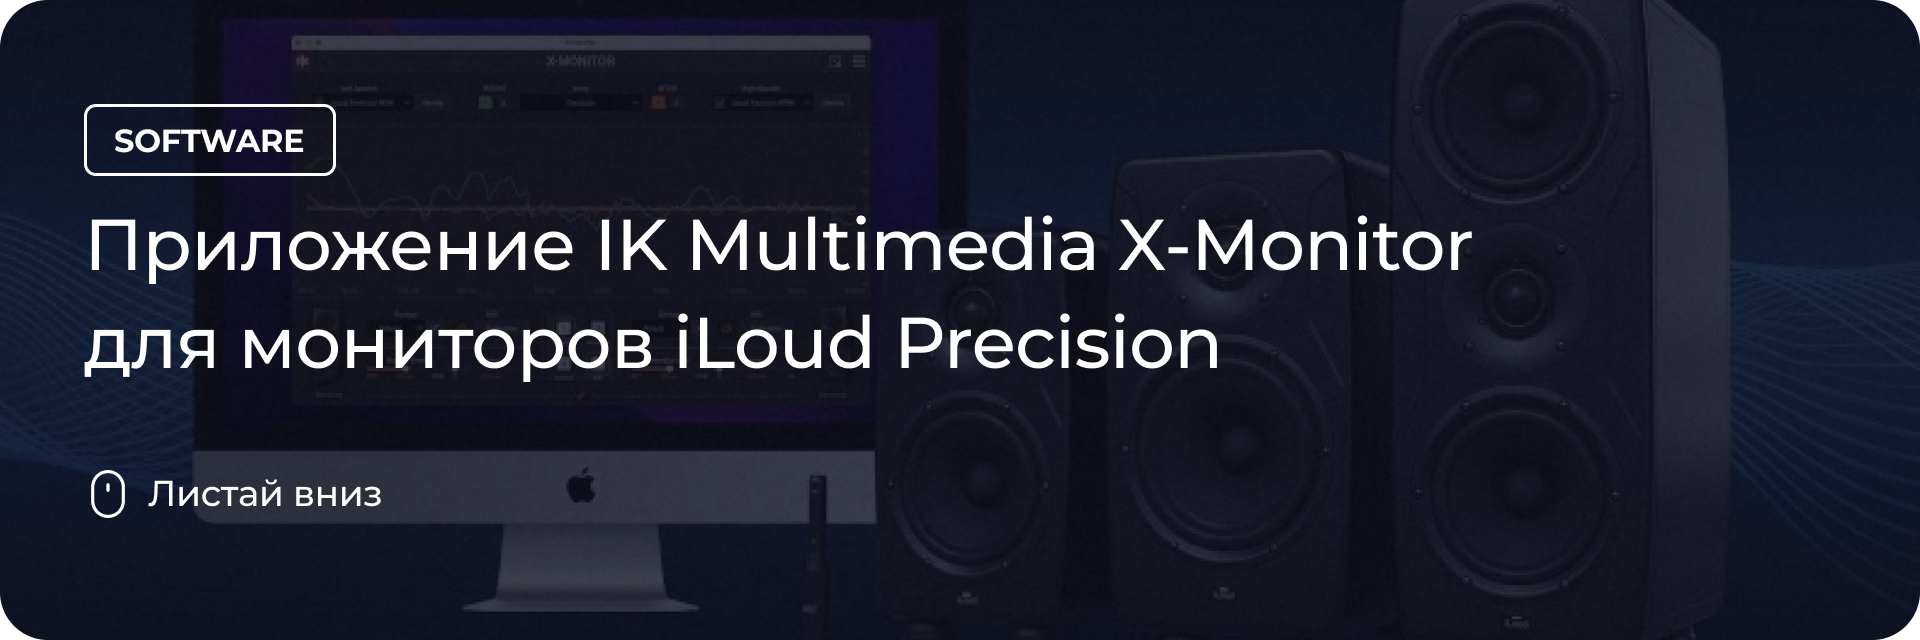 IK Multimedia X-Monitor для мониторов iLoud Precision